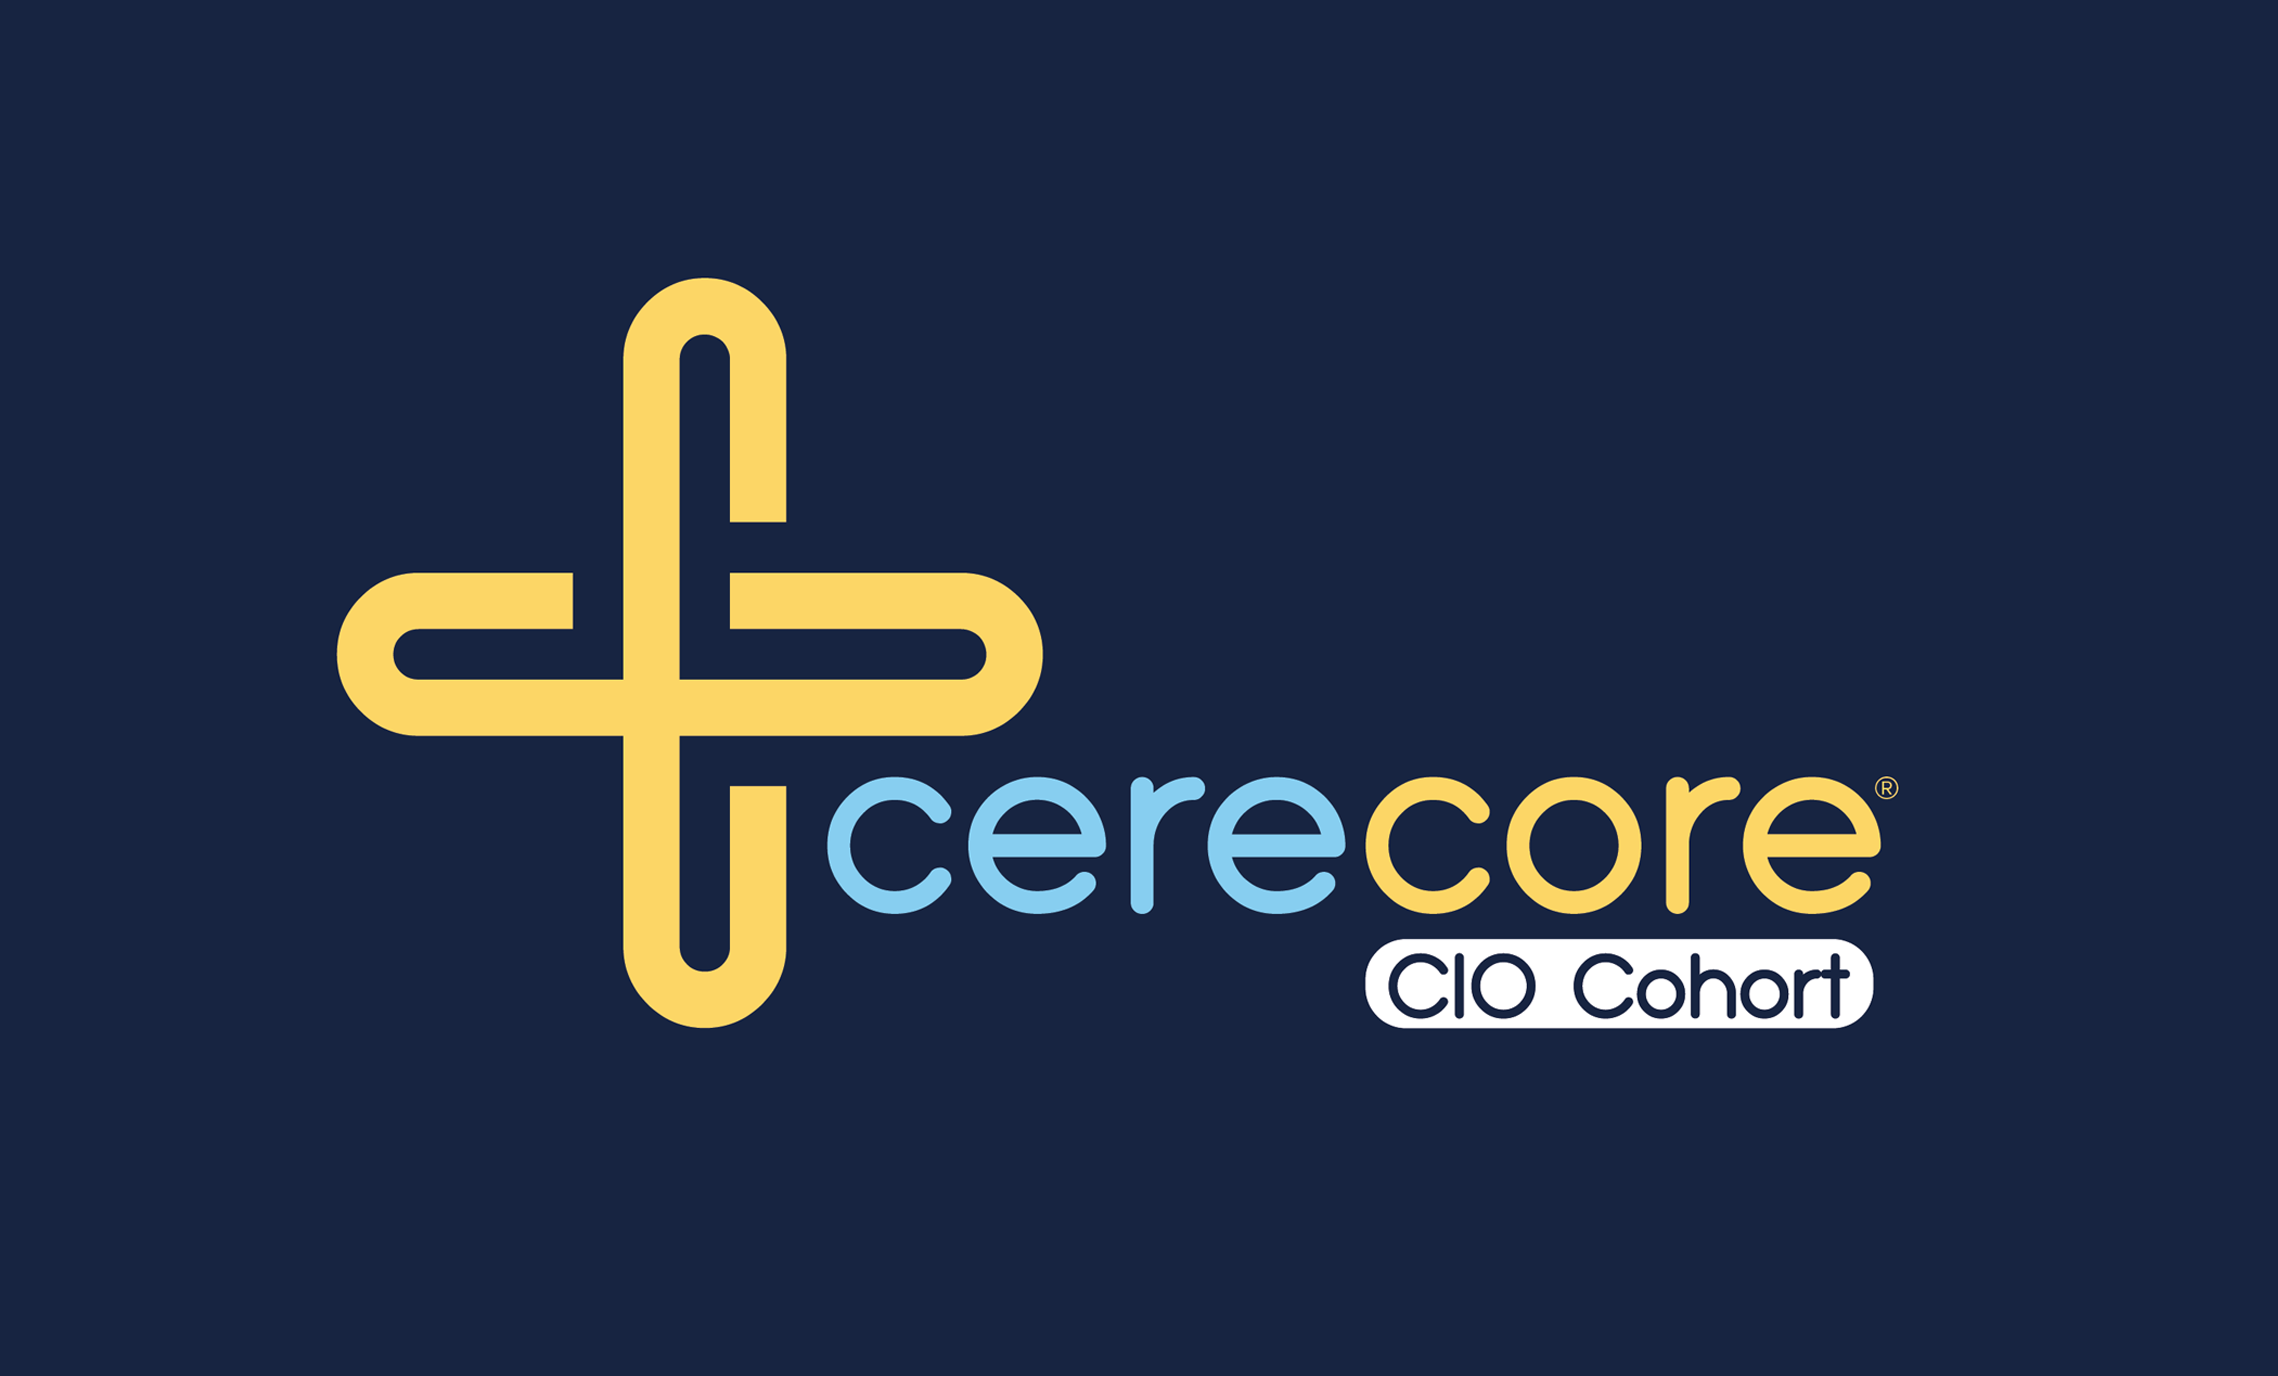 CereCoreLogo-CIO Cohort_Navy V1